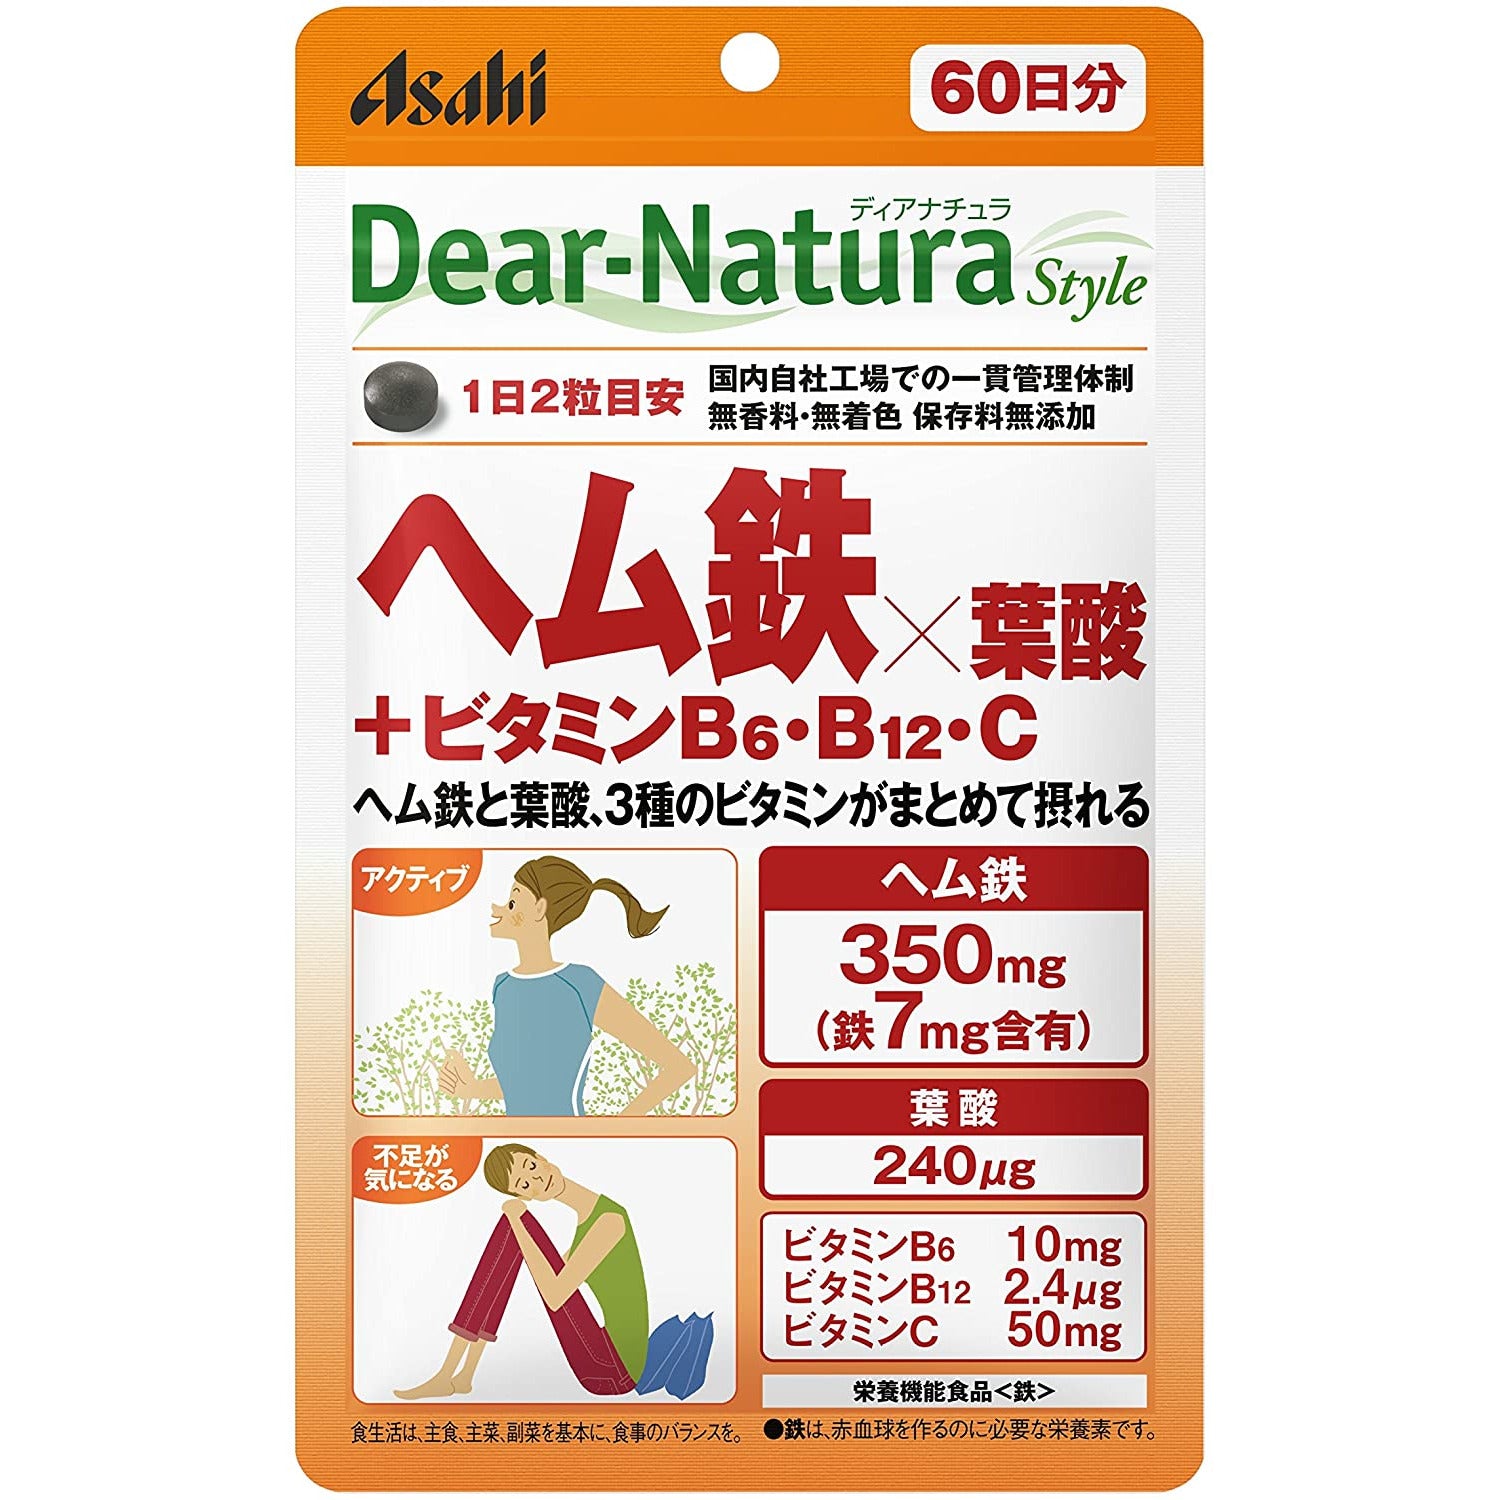 Asahi Foods. Dear-Natura Style Heme Iron Folic Acid + Vitamin B6 / B12 / C 120 Tablets (60 Days)